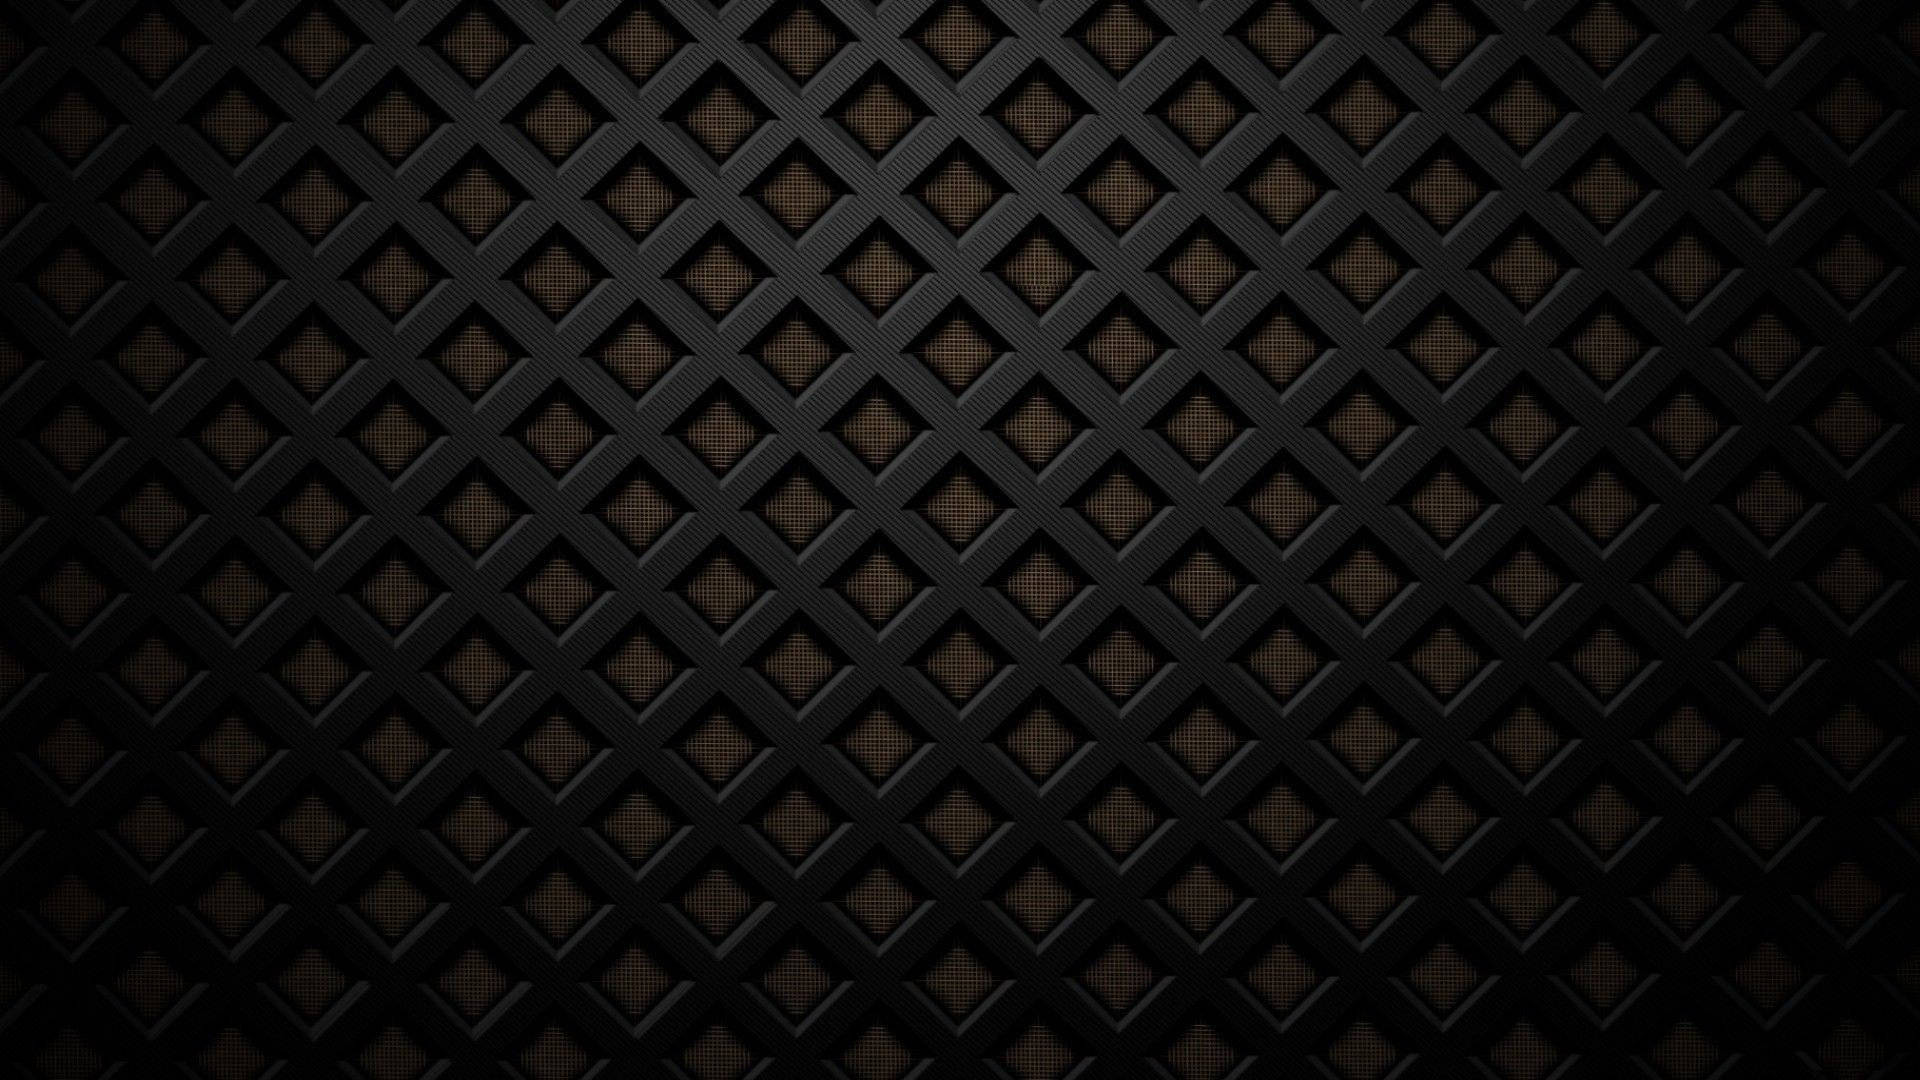 Free Black Abstract Wallpaper Downloads, [200+] Black Abstract Wallpapers  for FREE 